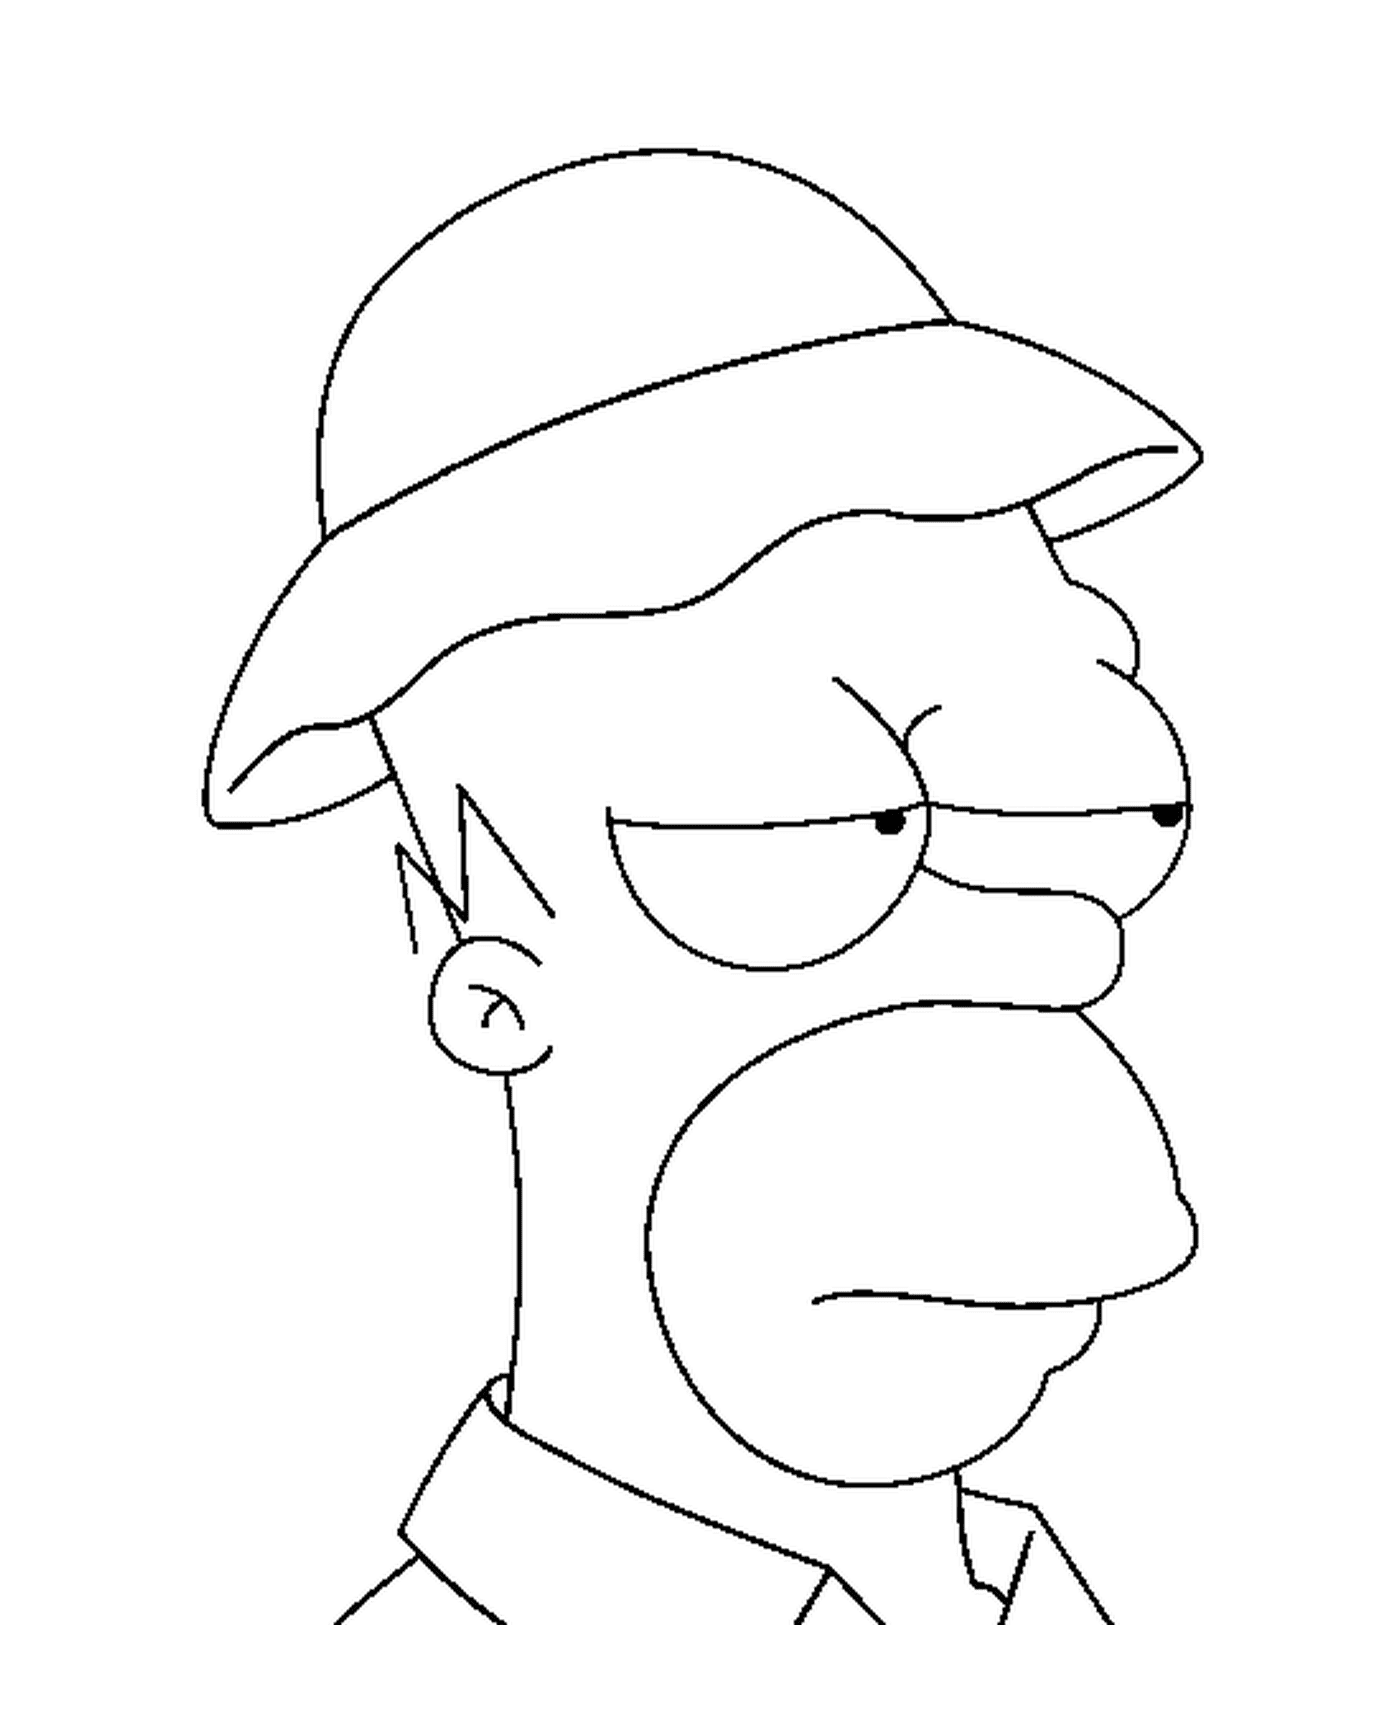  Homer Simpson in guard posture 